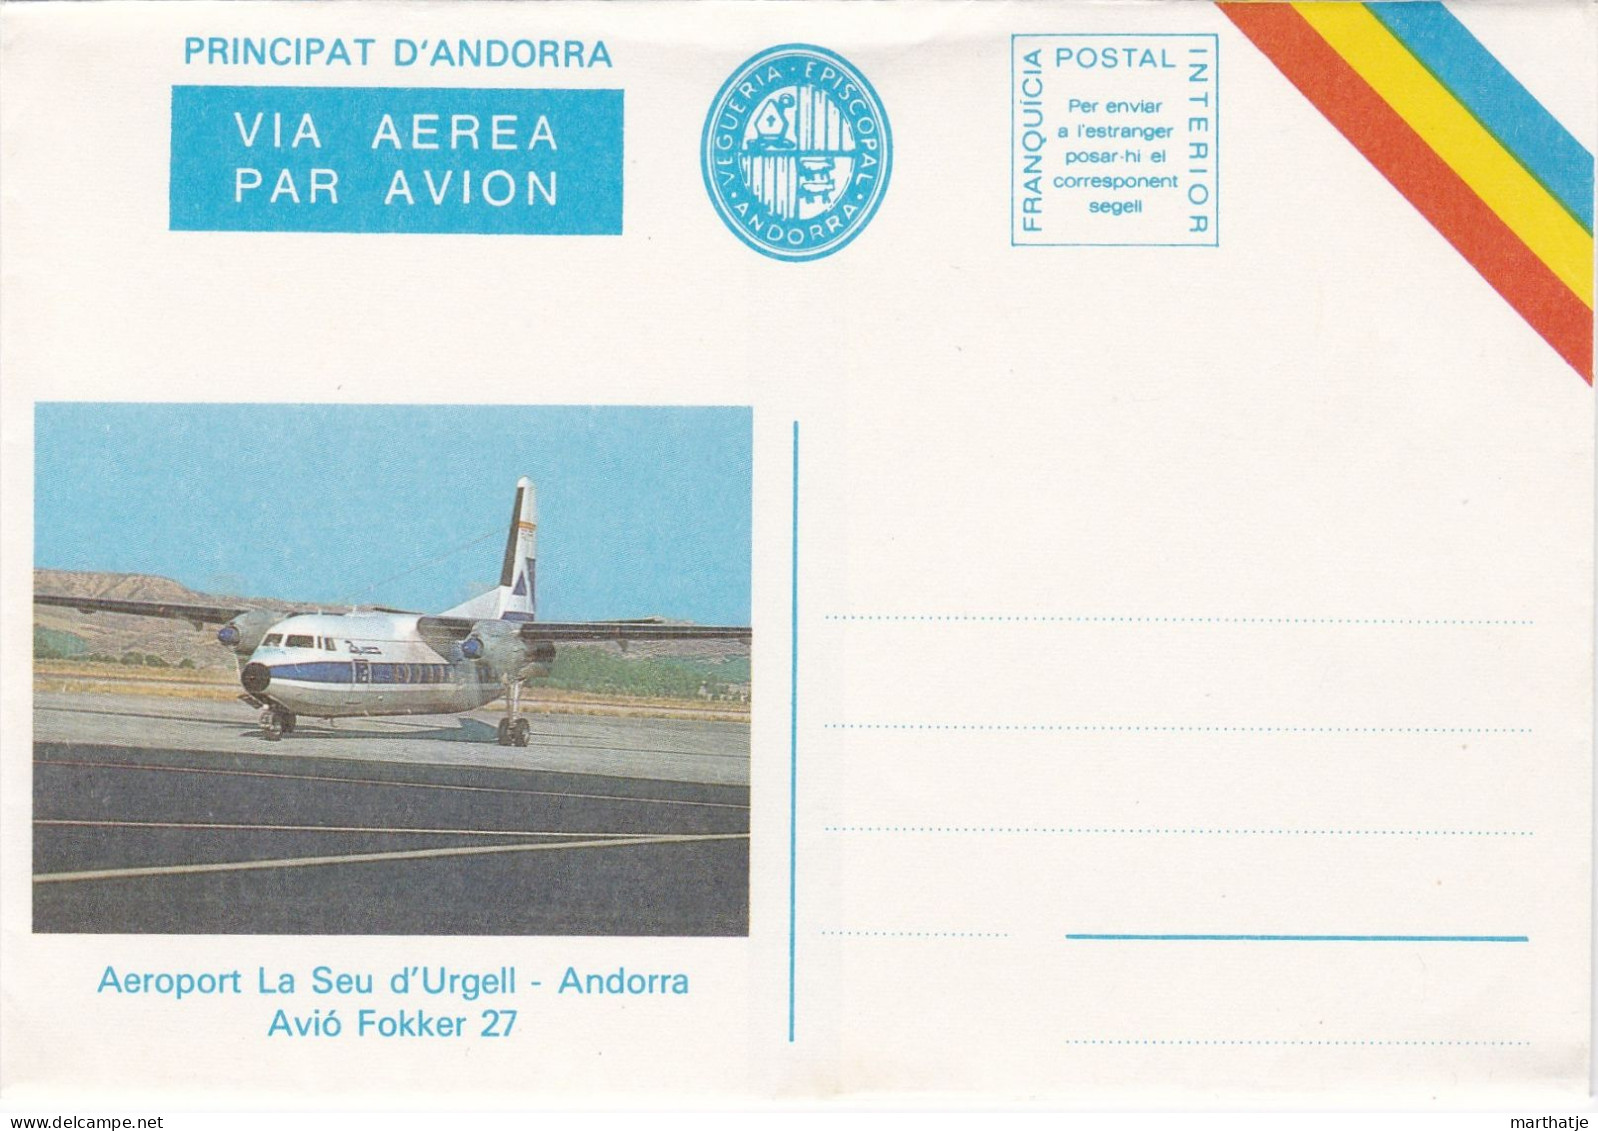 Principat D'Andorra -  Via Aerea Par Avion - Vegueria Episcopal - Aeroport La Seu D'Urgell - Avio Fokker 27 - Andorra - Bischöfliche Viguerie